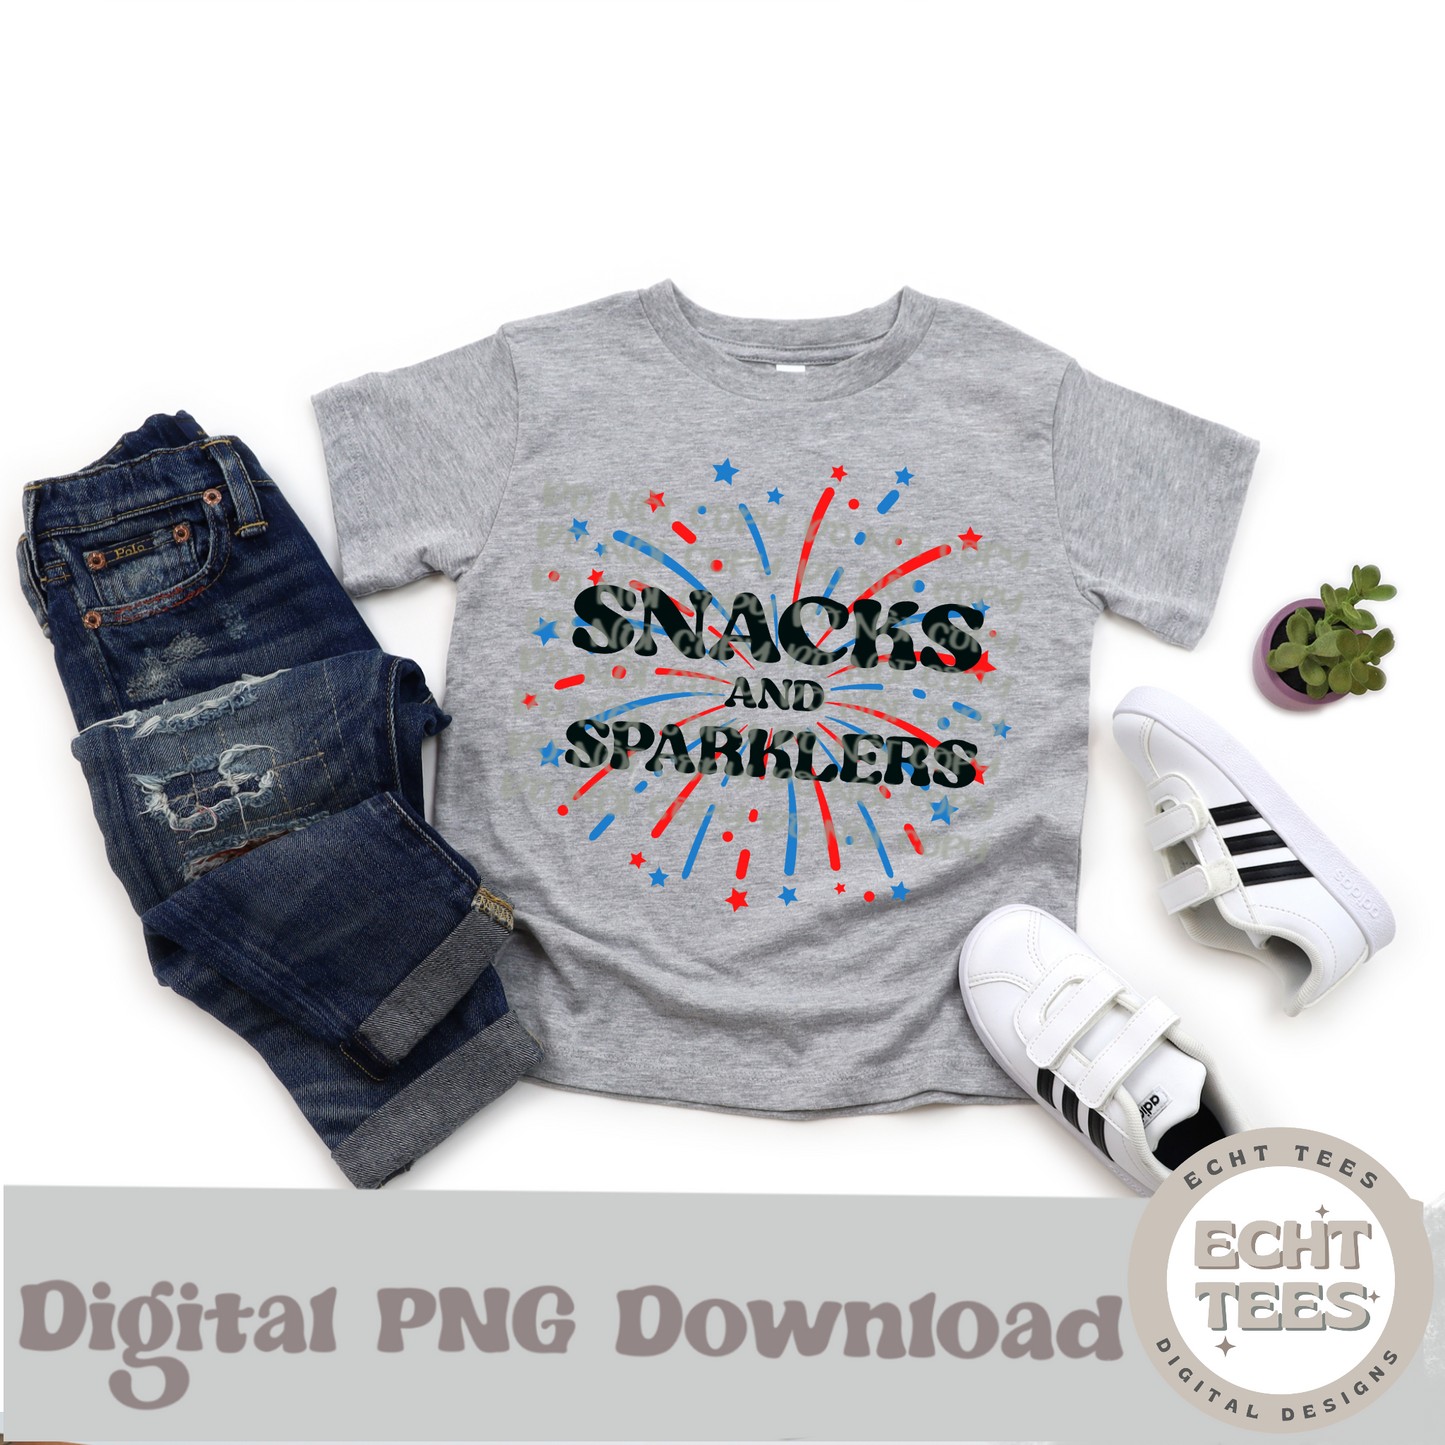 Snacks and sparklers PNG Digital Download